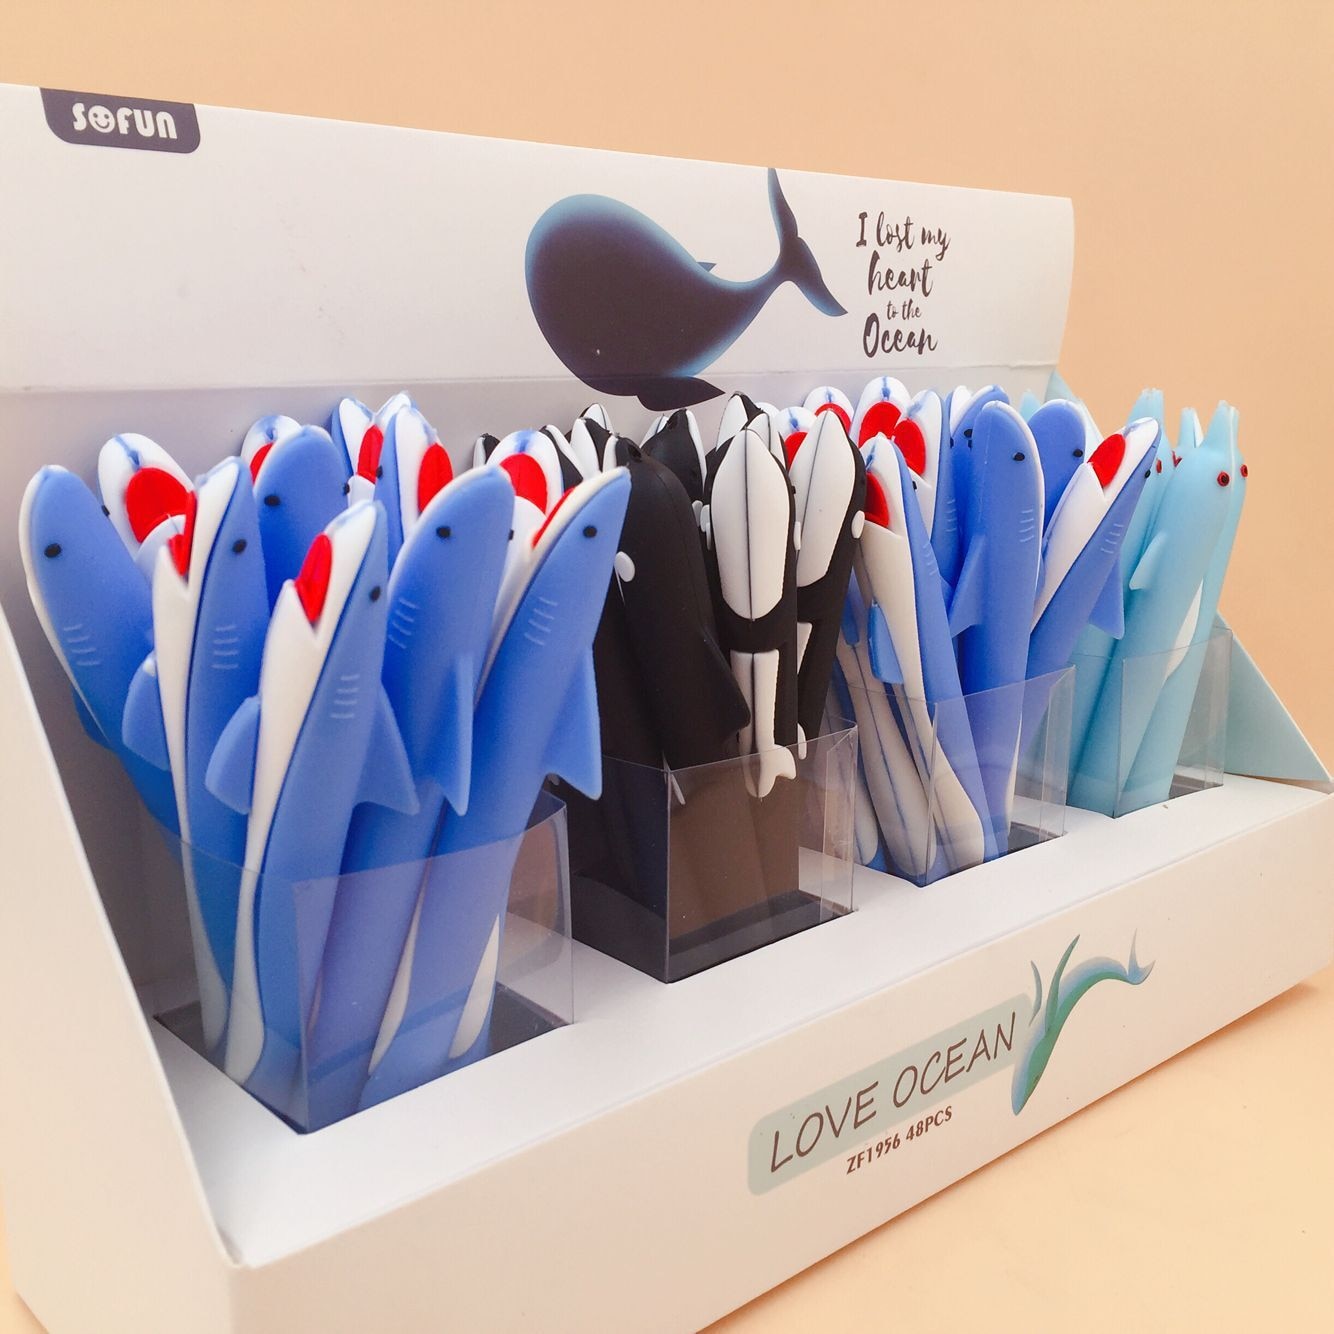 1 Pcs Lytwtw's Fish Shark Soft Silicone Cute Kawaii School Office Stationery Gel Pen Creative Gift Supply sweet pretty lovely